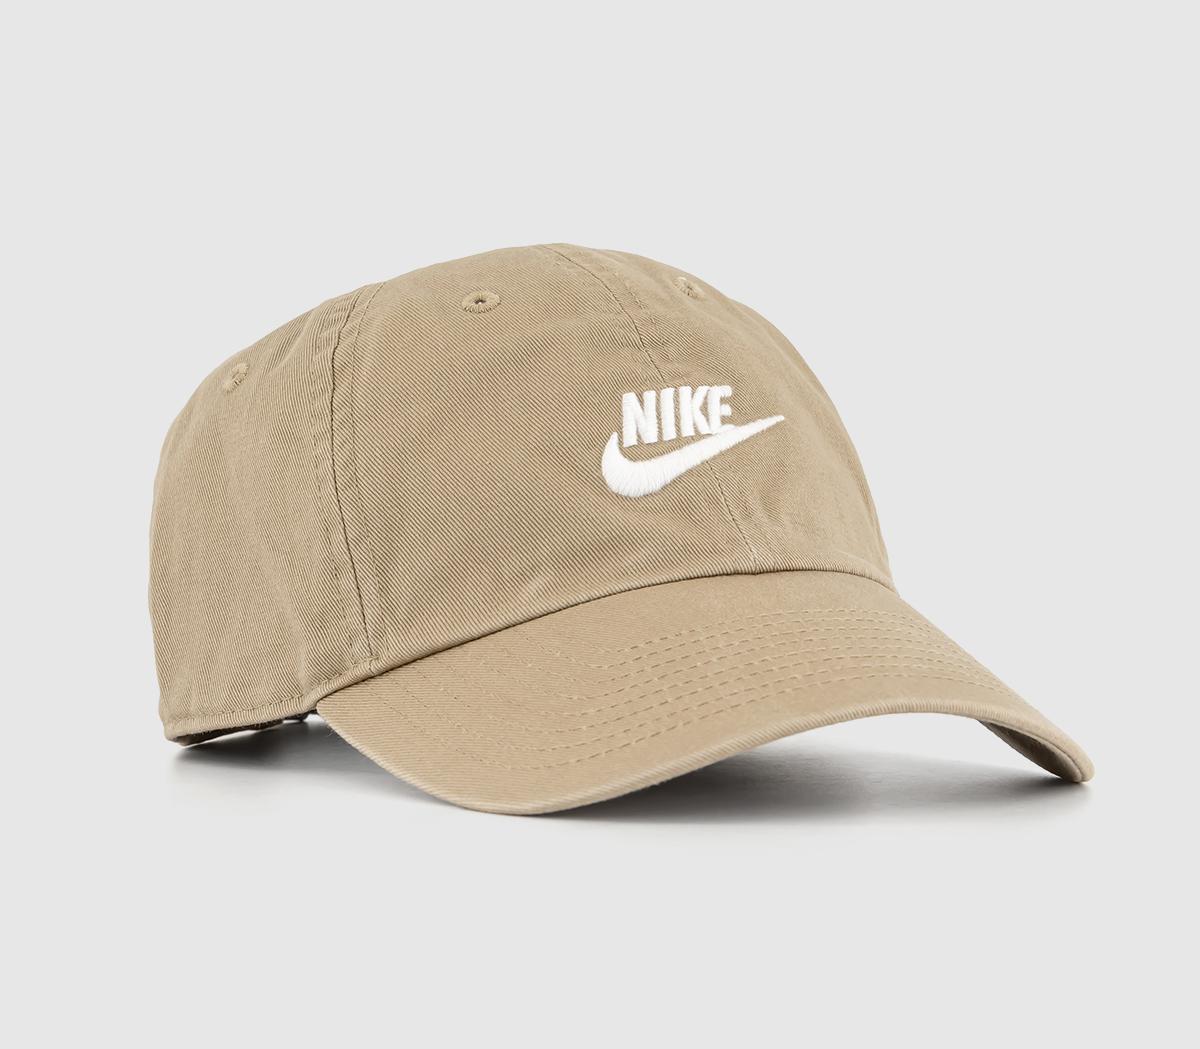 Nike Nike Club Cap Khaki White - Accessories